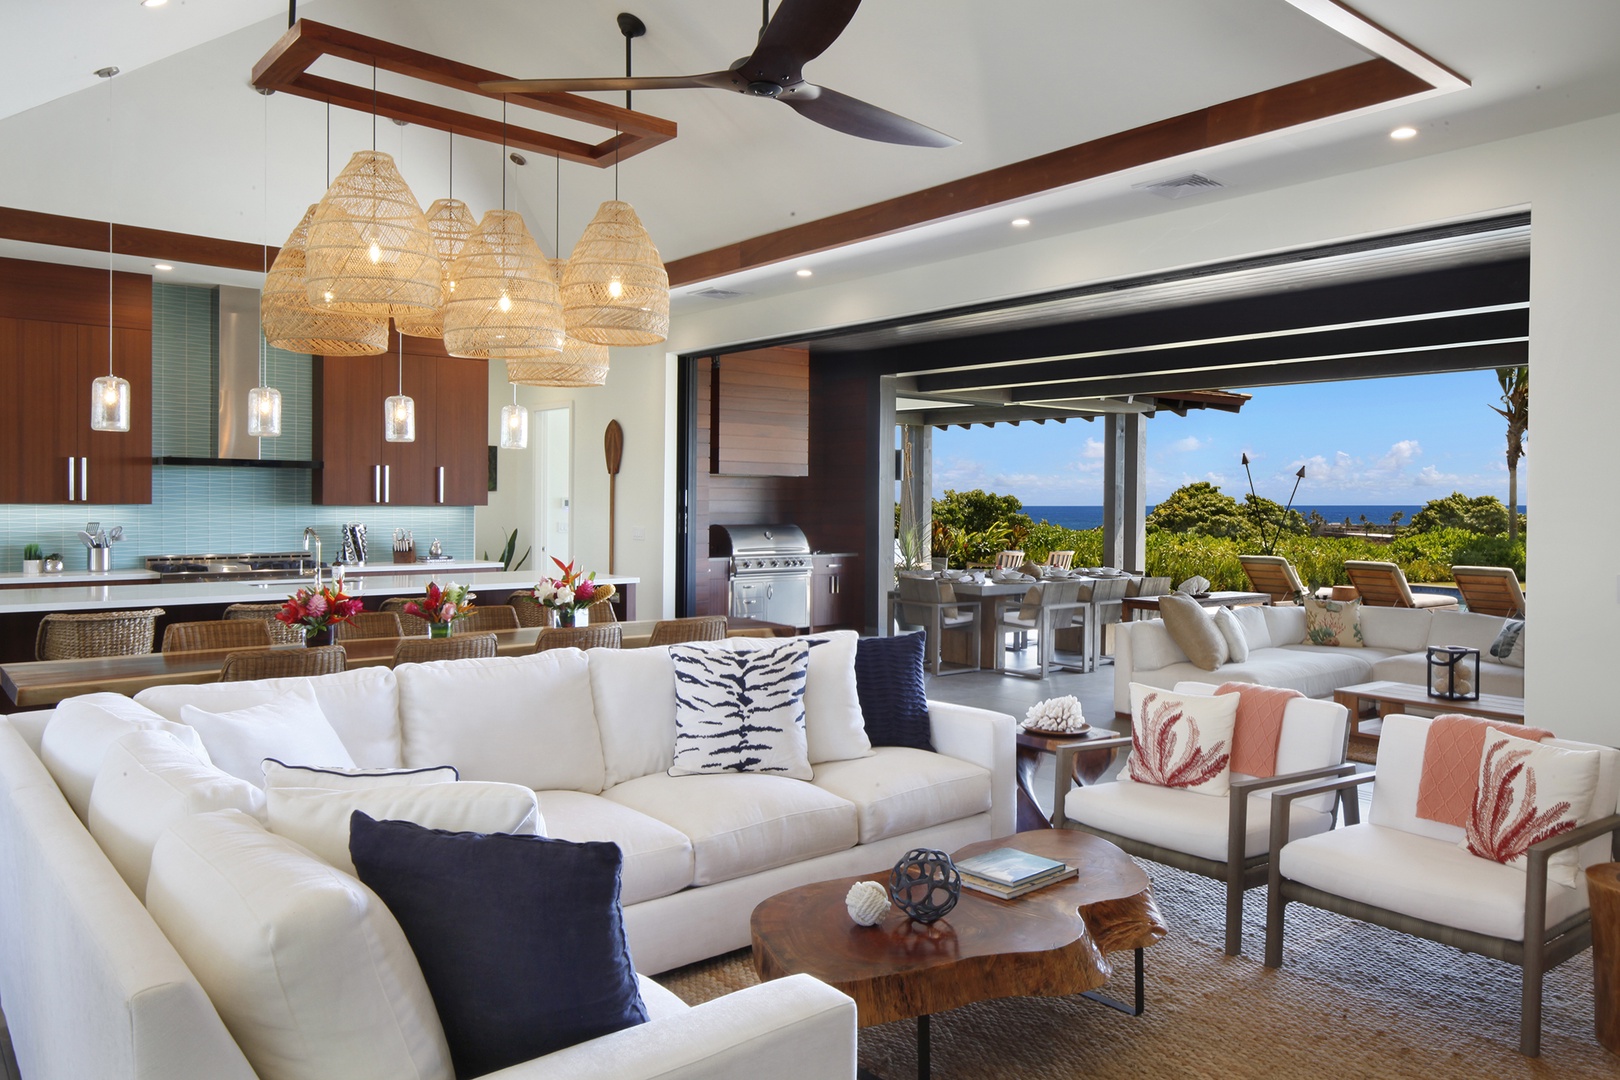 Koloa Vacation Rentals, Hale Pomaika'i Mau - Living room / outdoor living space with ocean views